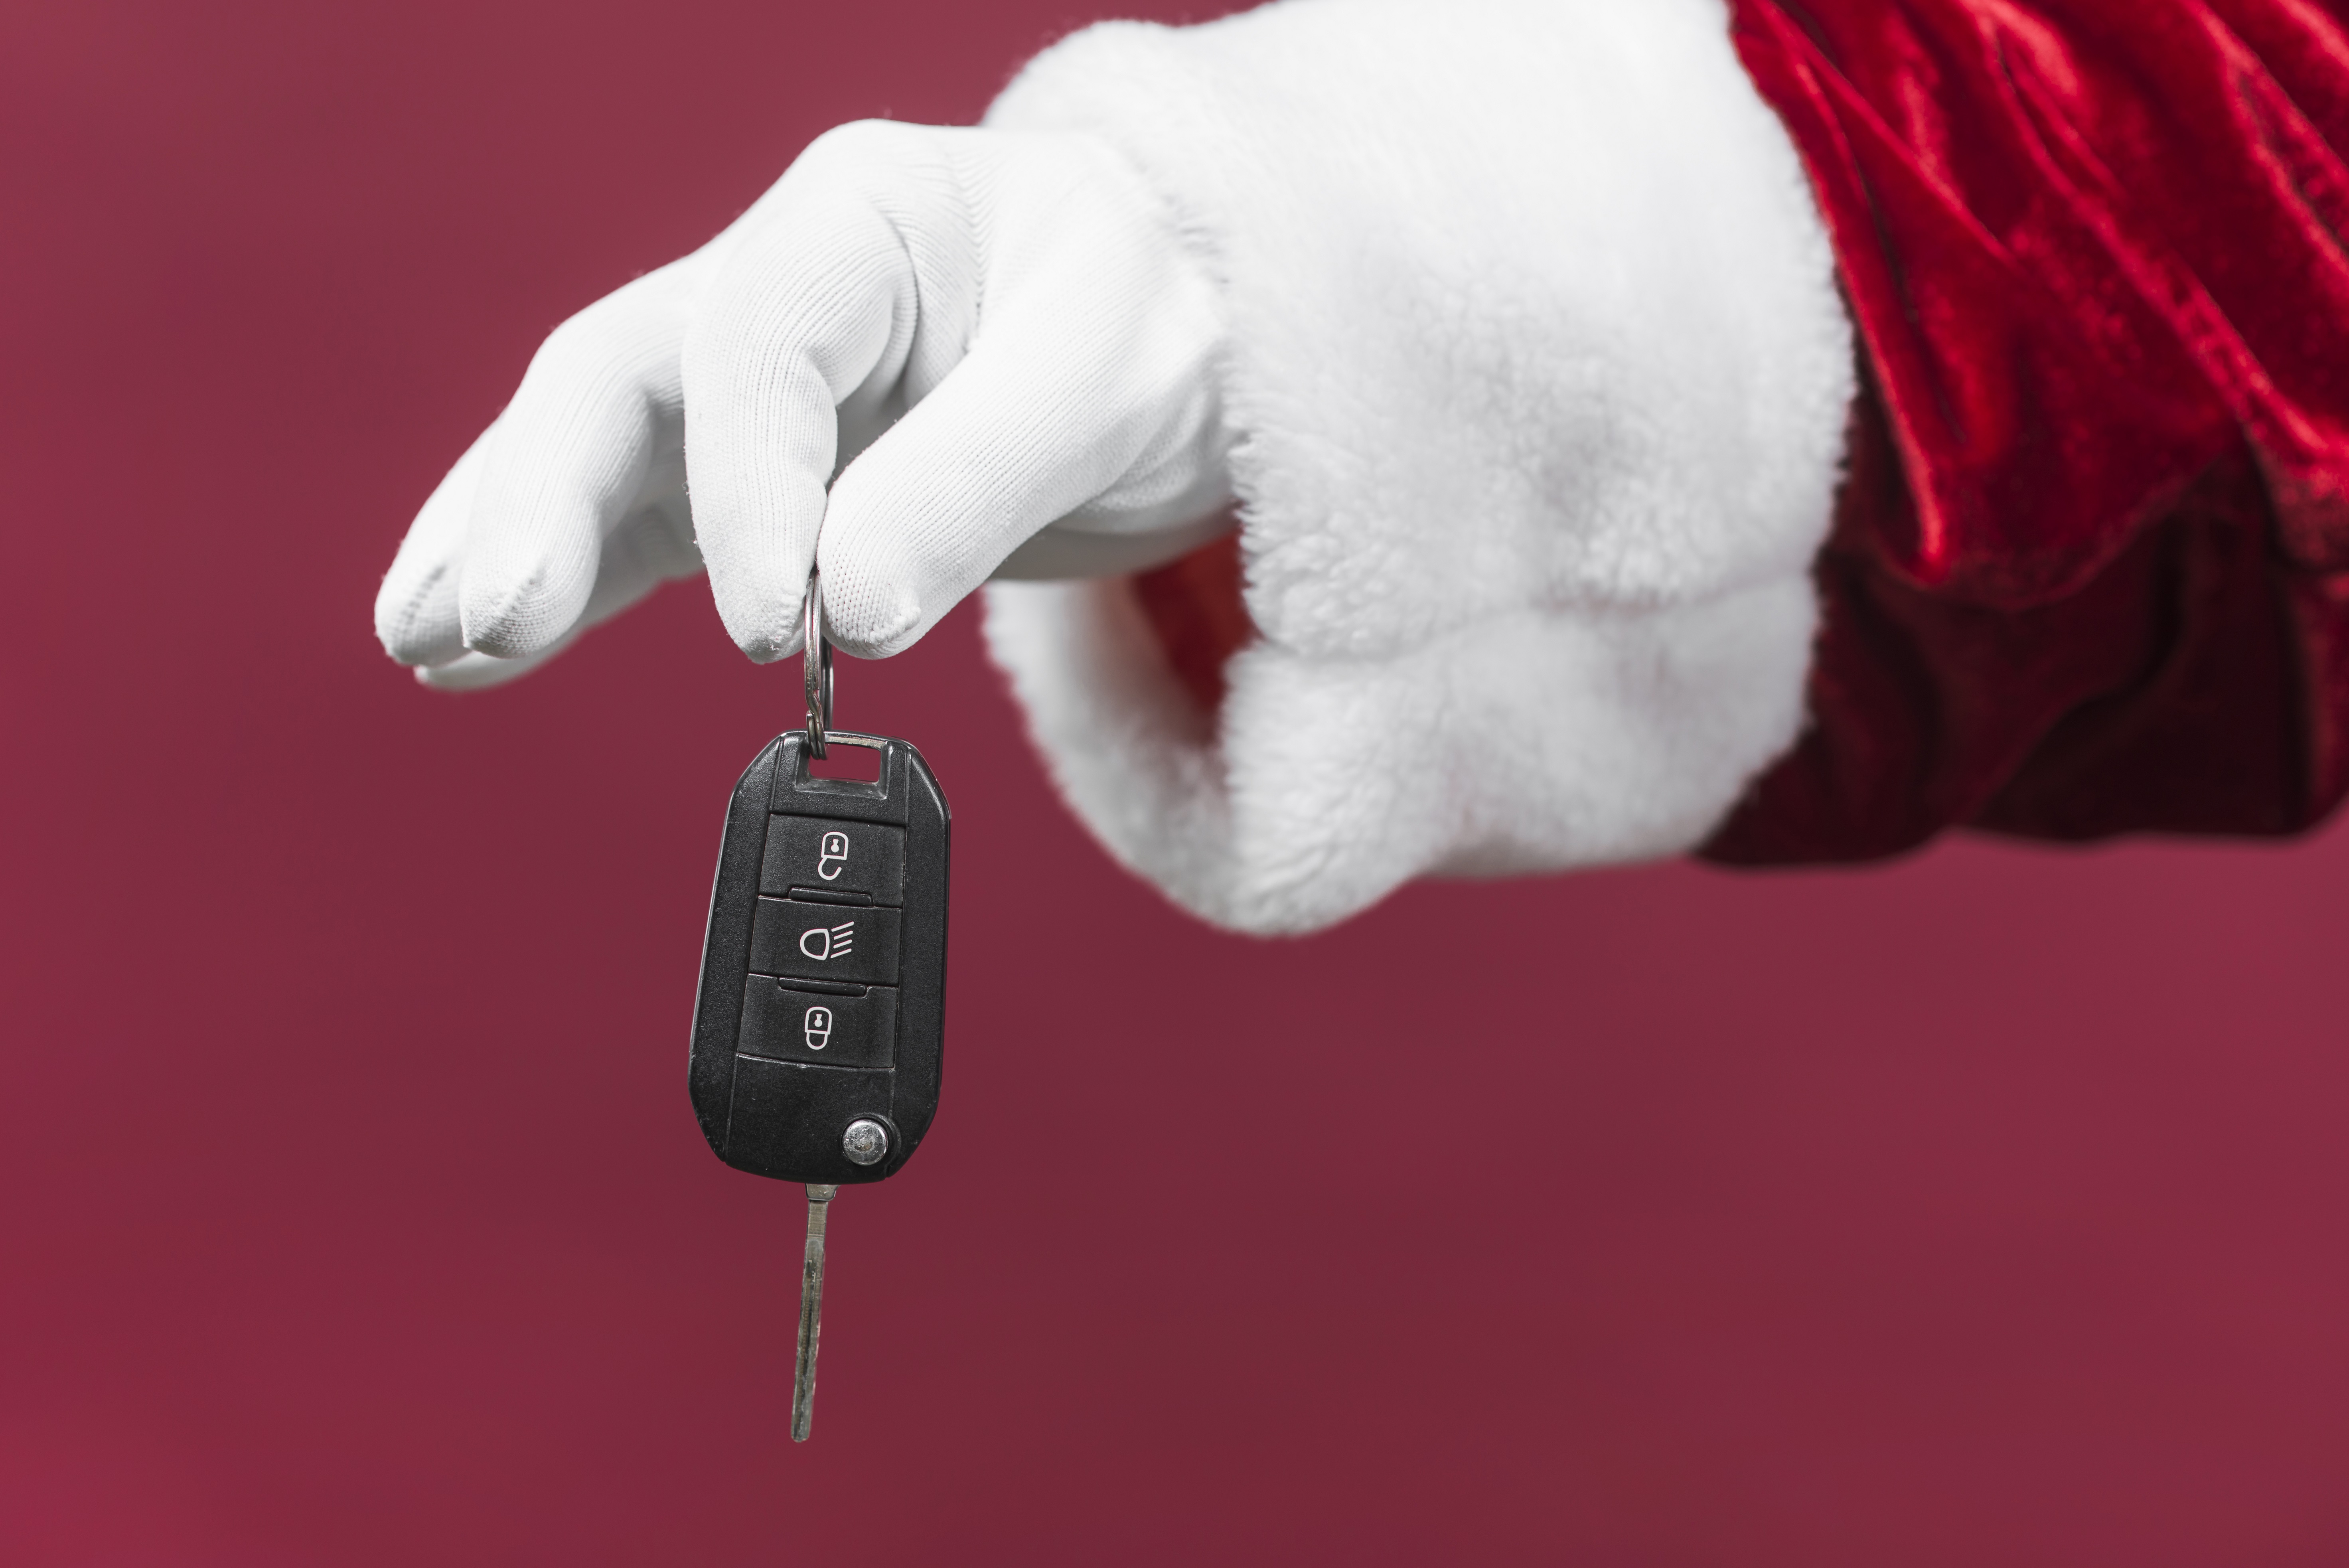 Zoom Car Loans No Deposit Christmas Car